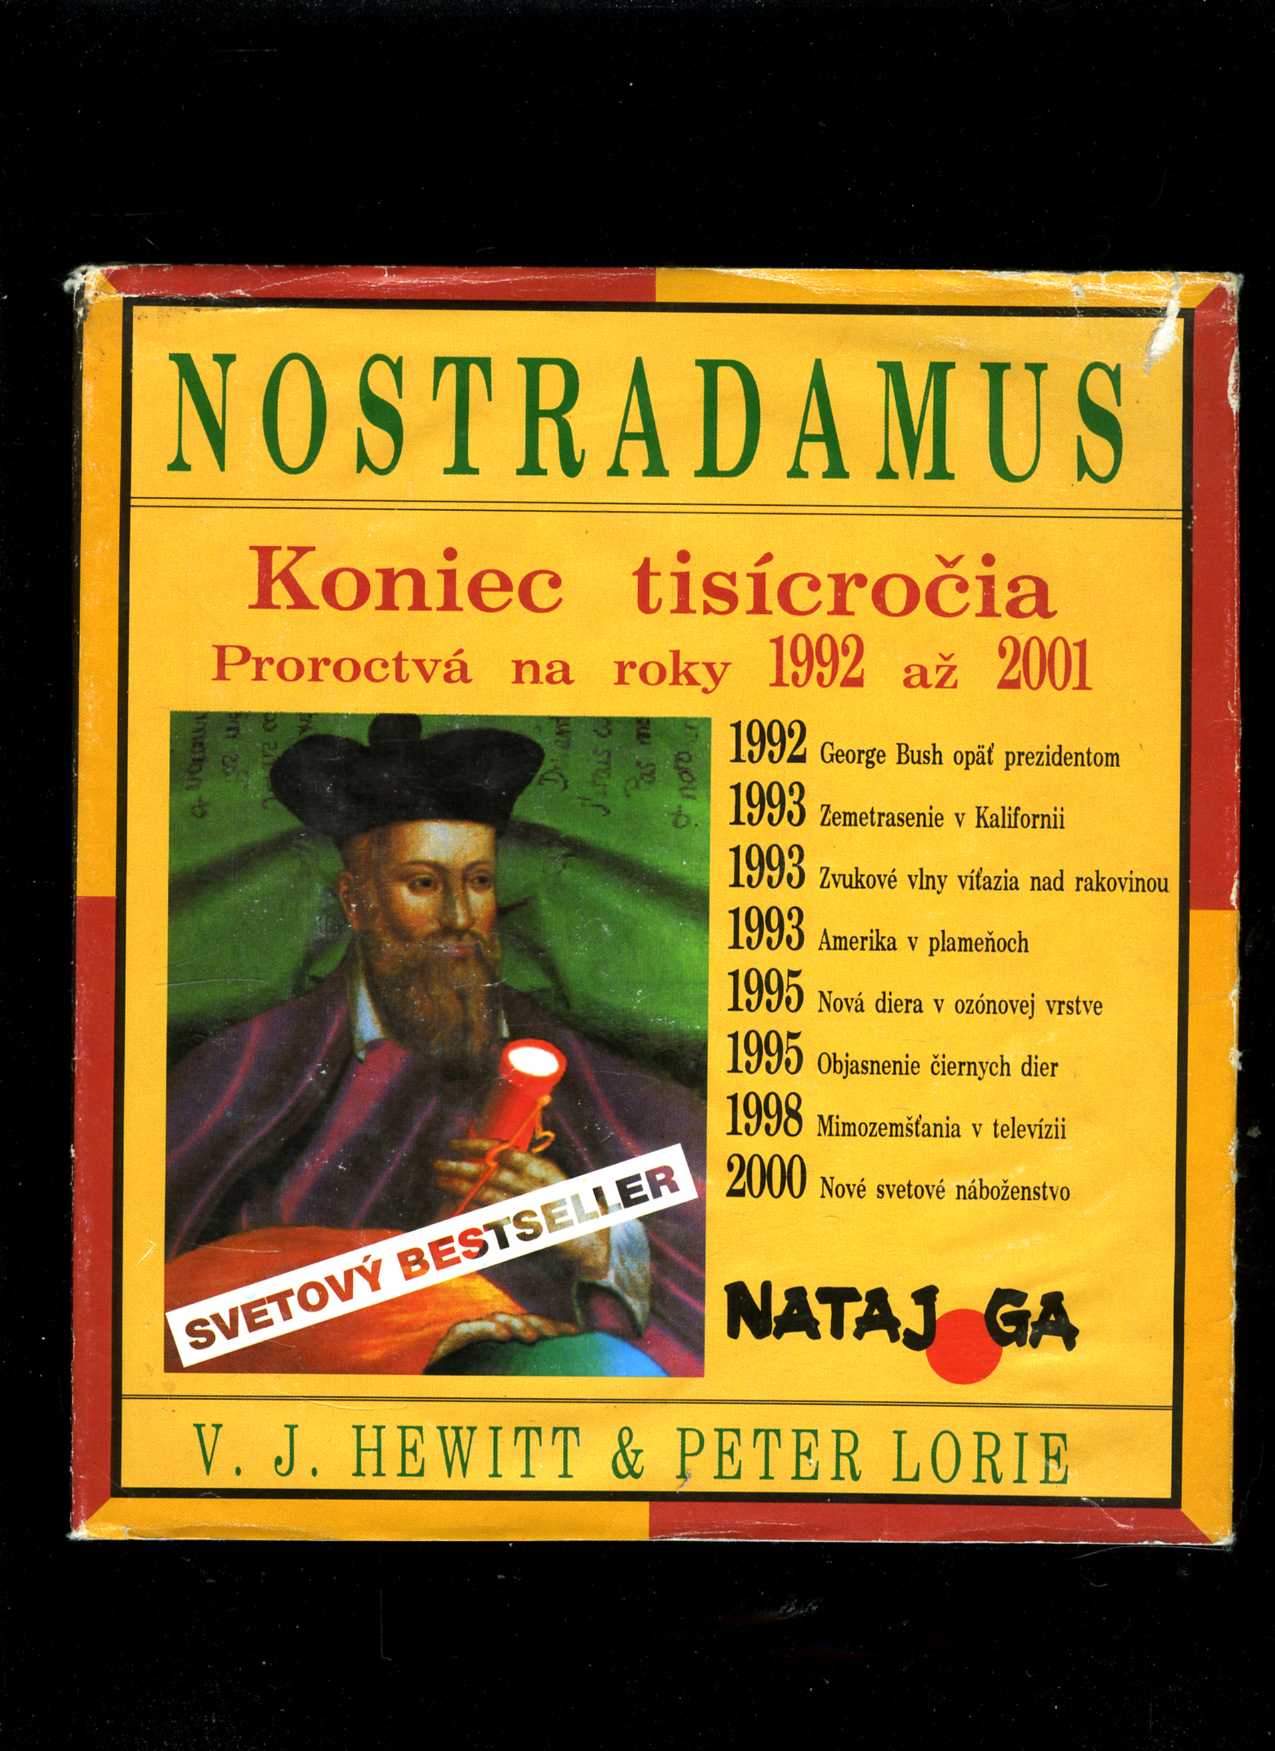 Nostradamus - Koniec tisícročia (V. J. Hewitt, Peter Lorie)